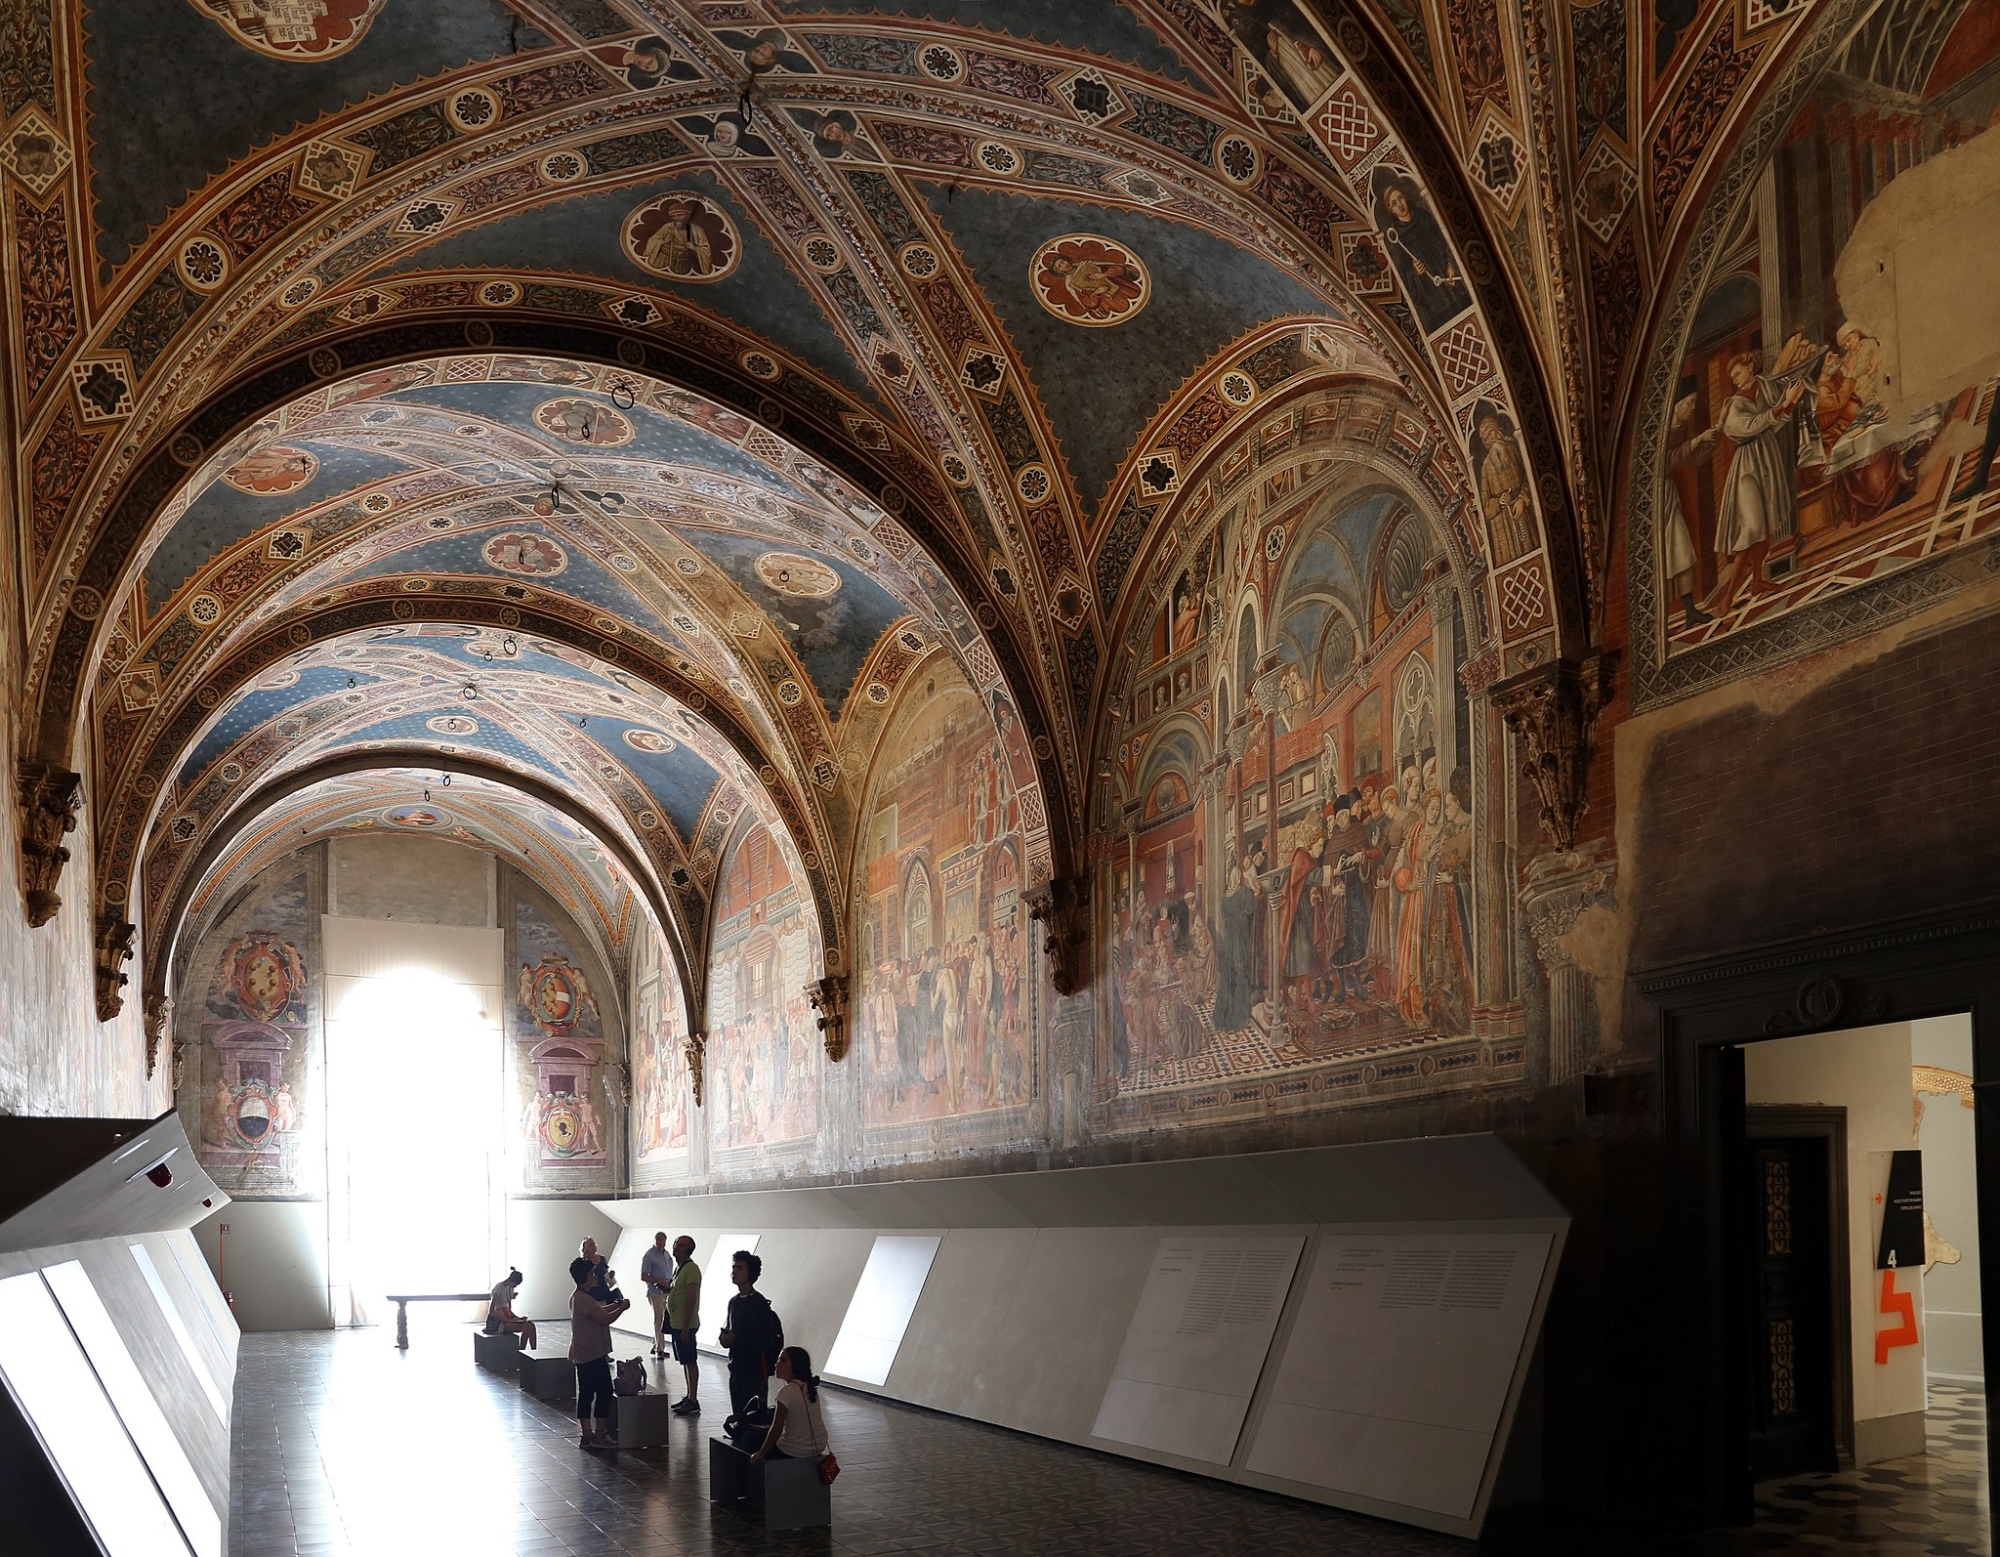 Pilgrims' Hall (Sala del Pellegrinaio) in the Santa Maria della Scala in Siena